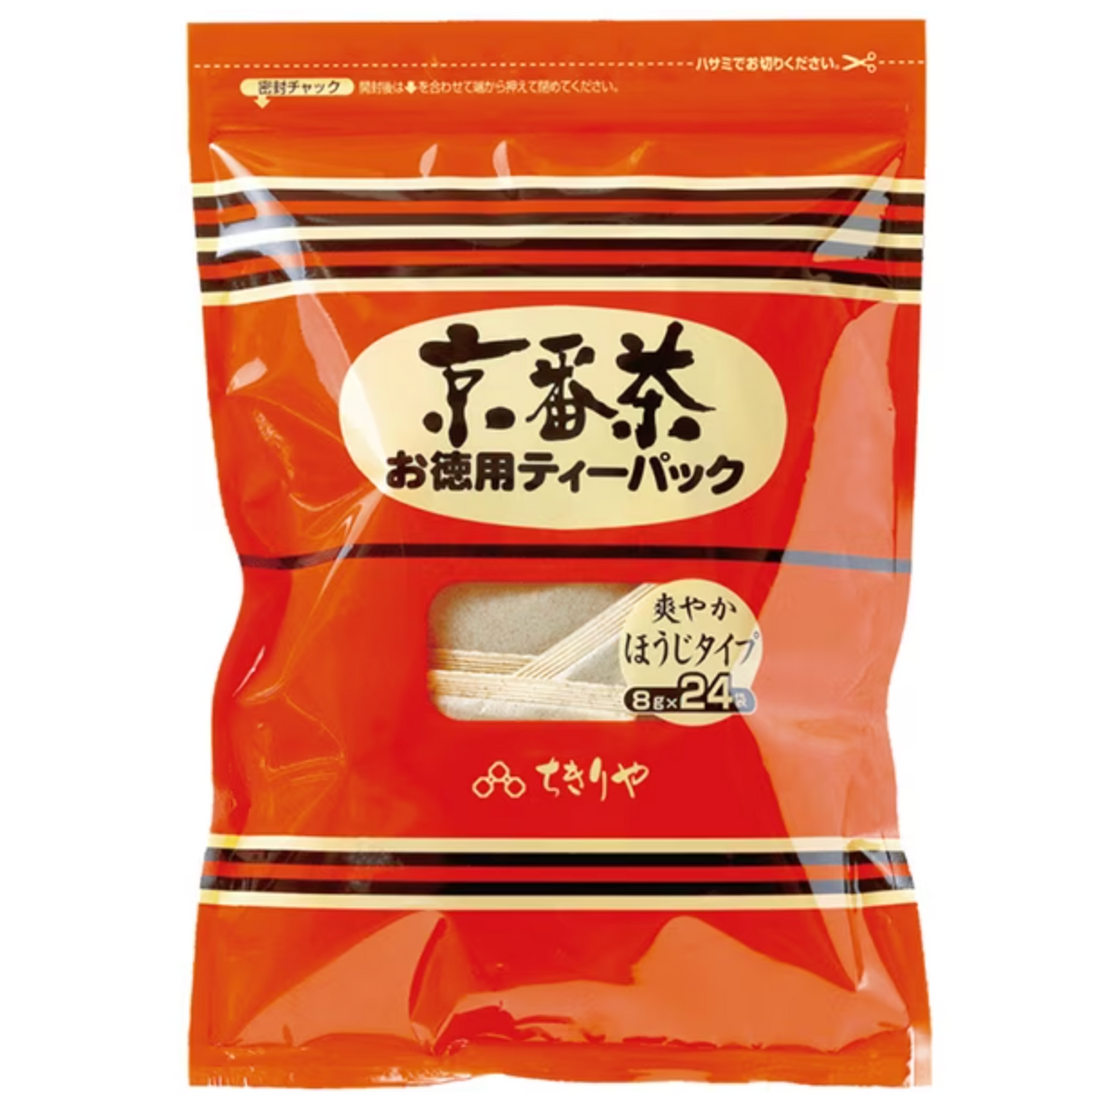 Chikiriya Kyo Bancha Tea Pack 8gx24